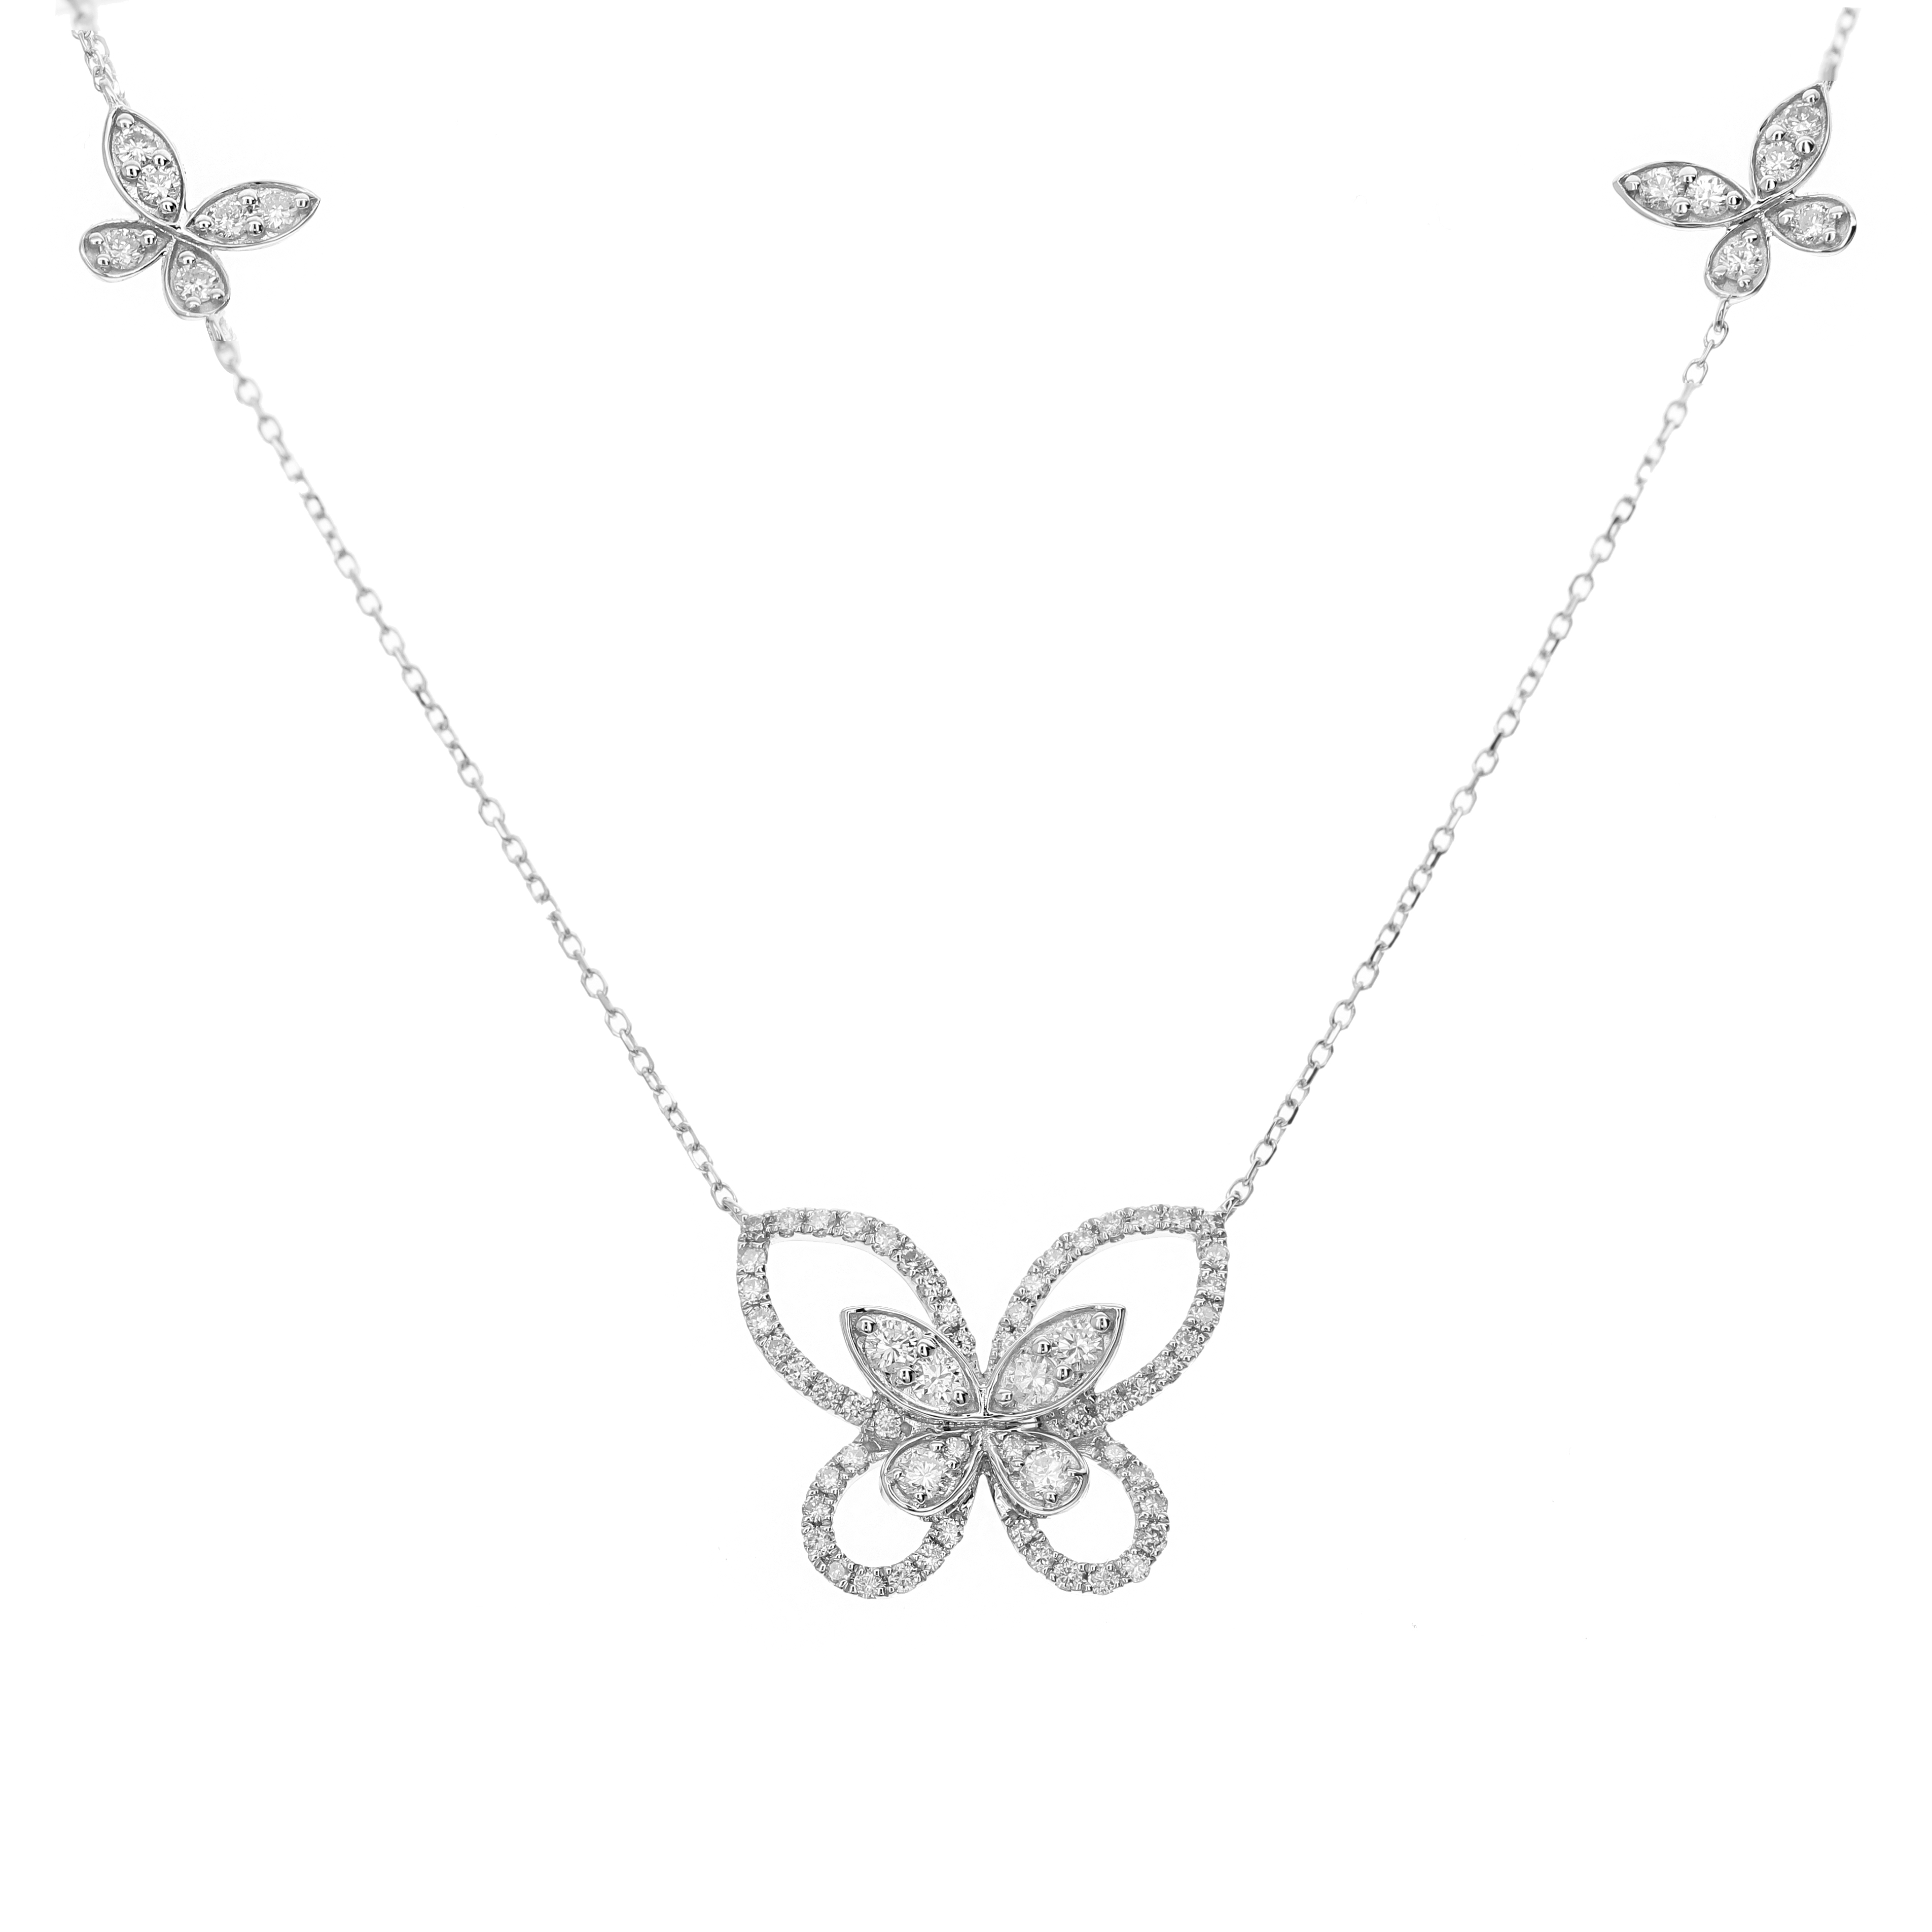 An 18k White Gold Diamond Butterfly Necklace